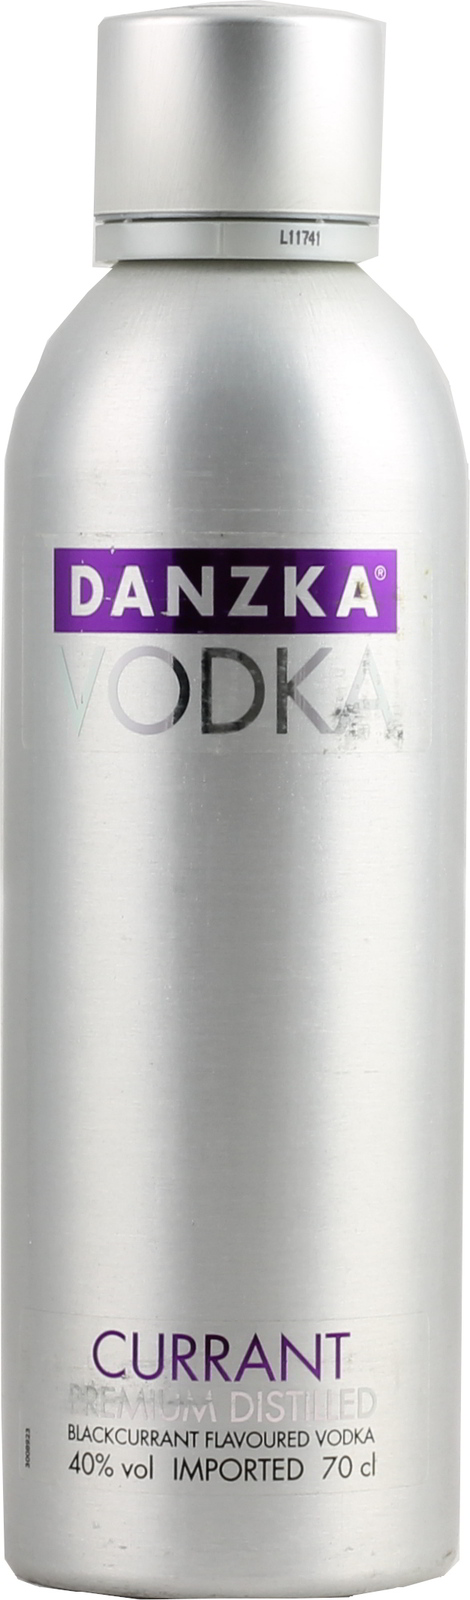 kaufen Danzka Vodka Currant online